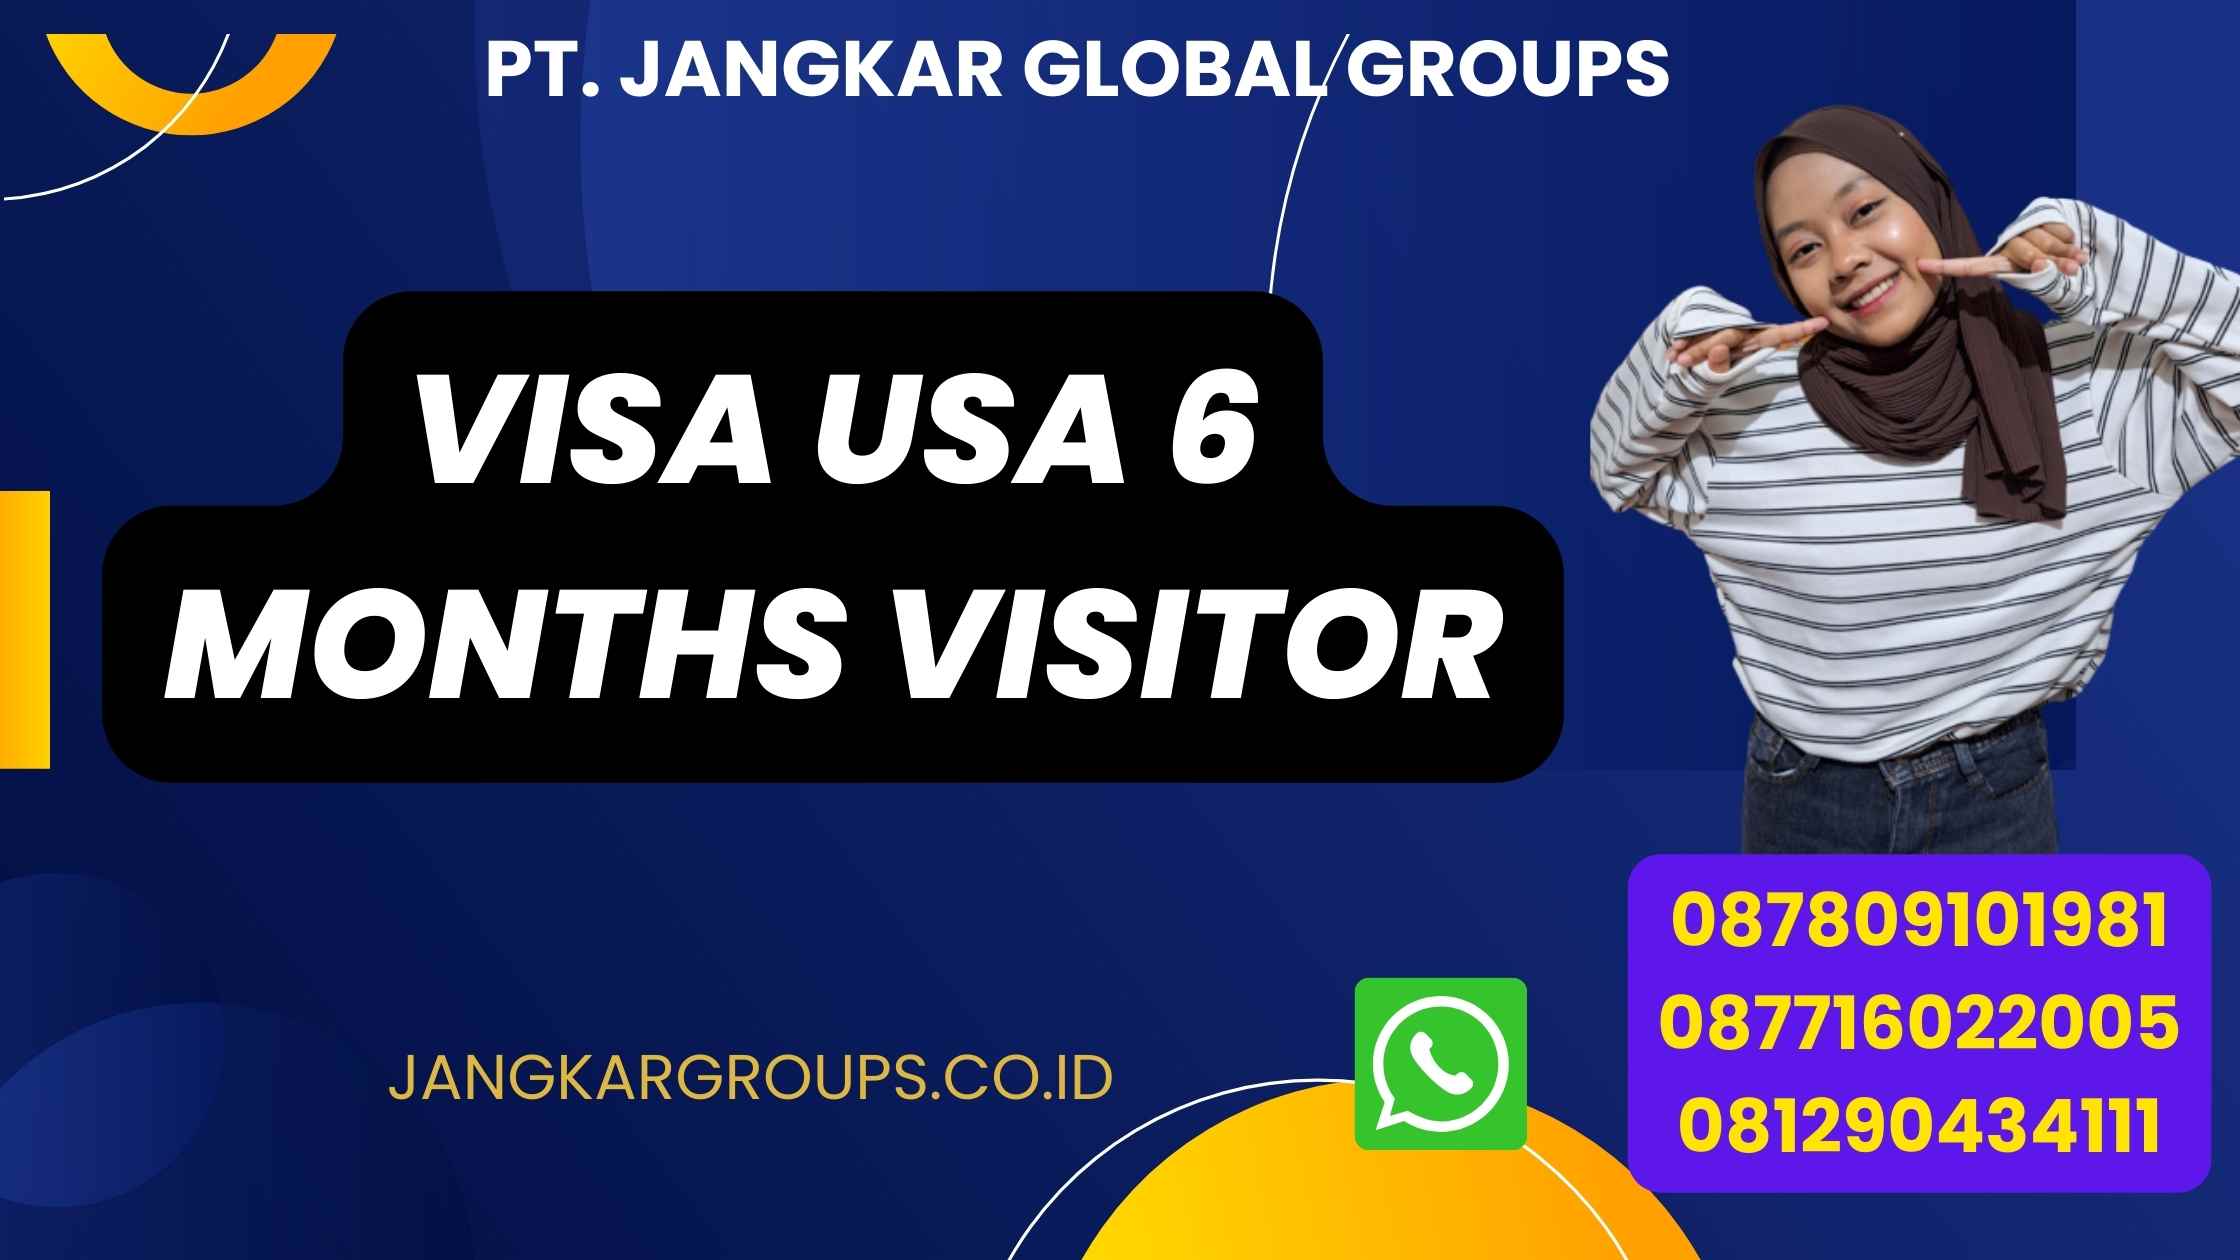 Visa USA 6 Months Visitor